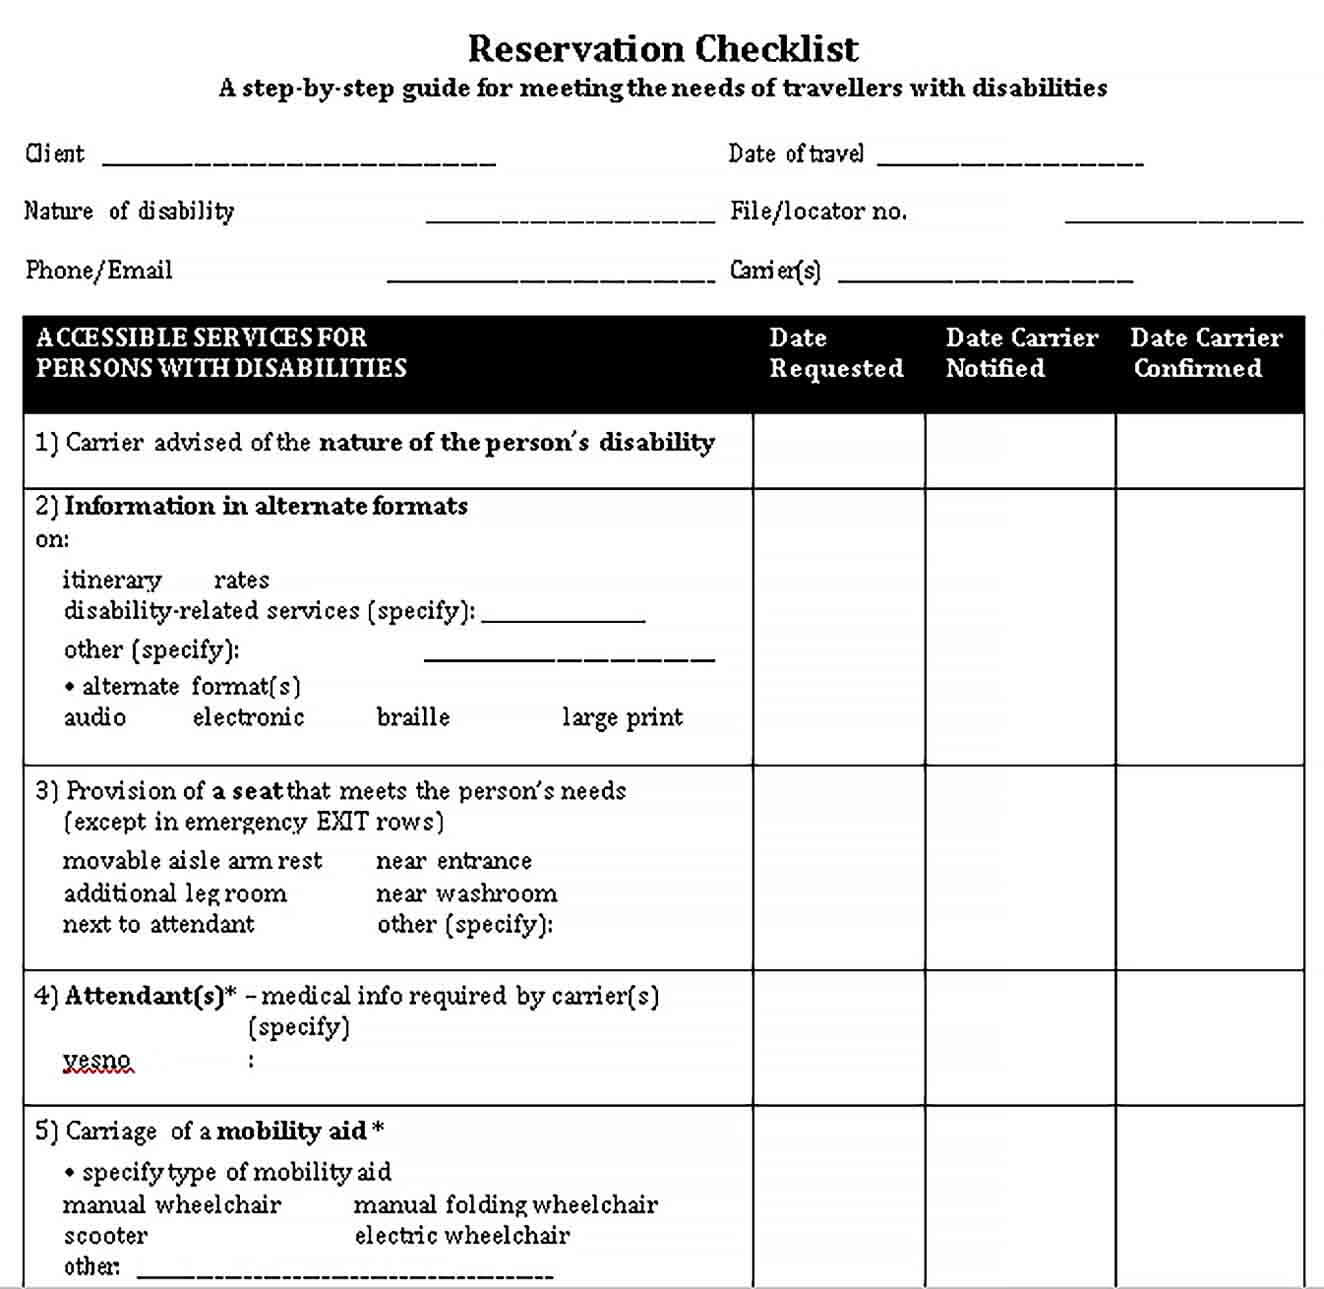 Reservation Checklist Template 5